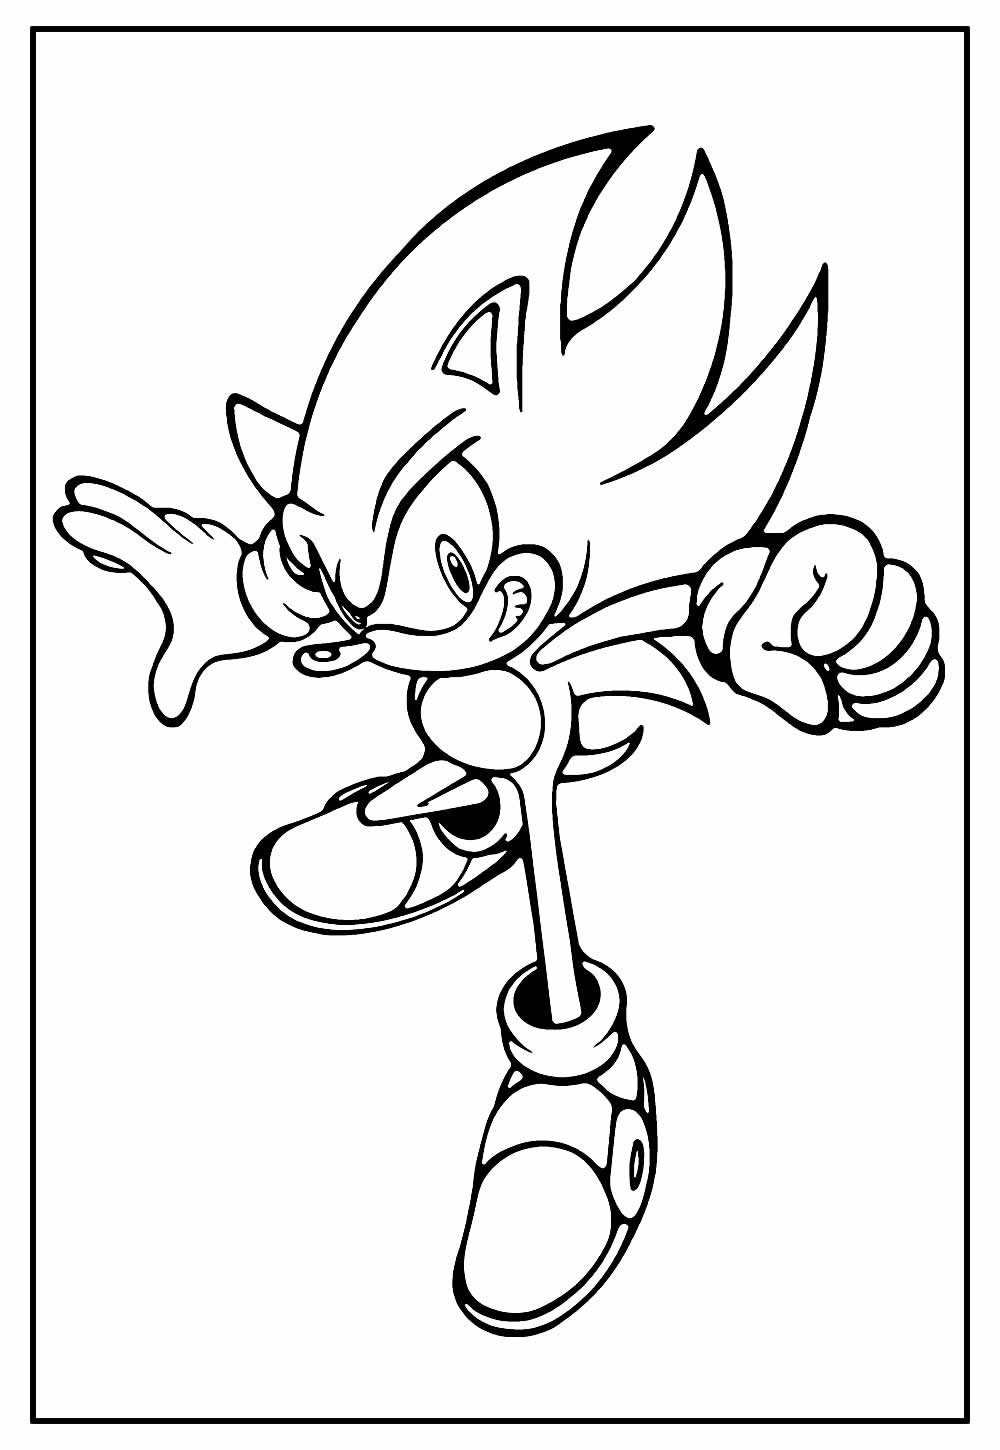 Colorir desenho do Sonic